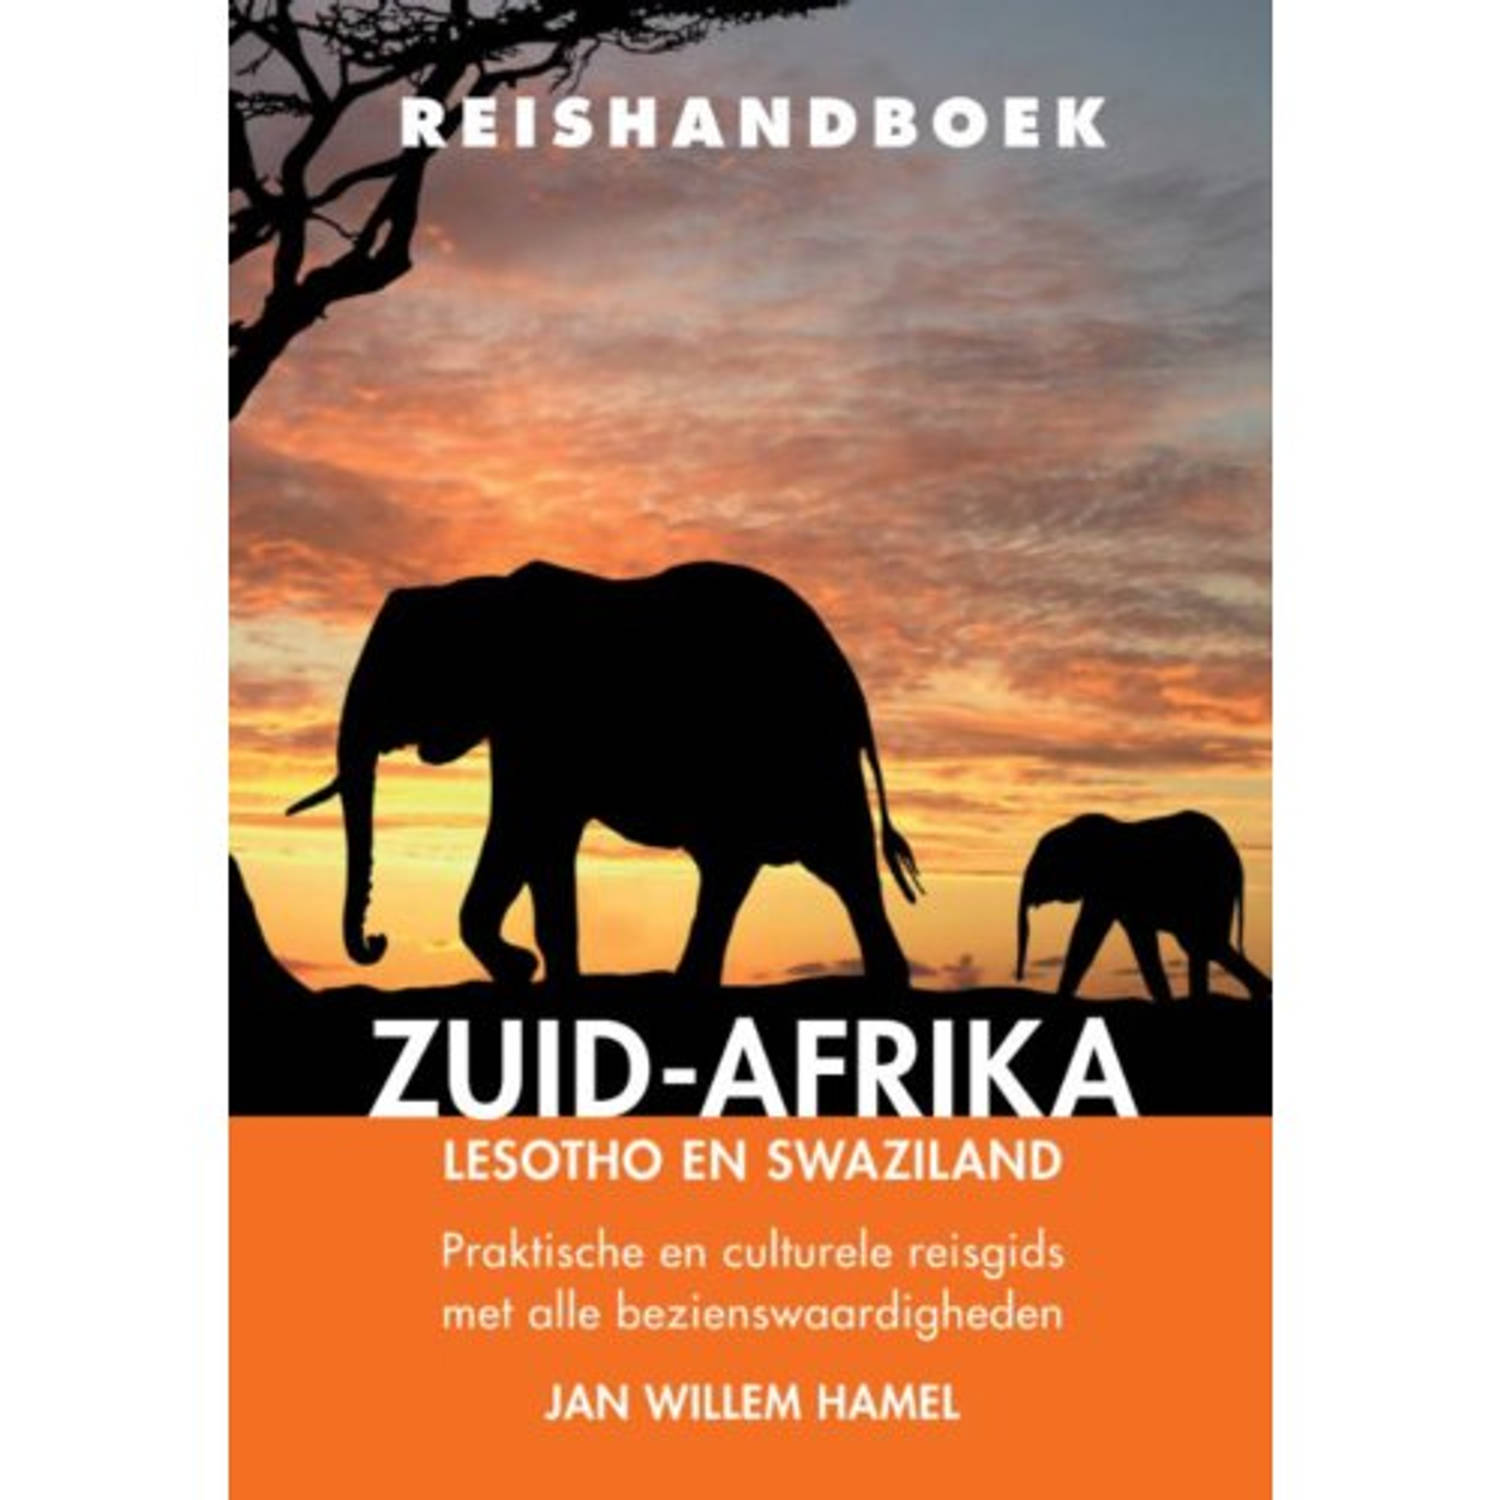 Reishandboek Zuid-afrika, Lesotho En Swaziland -